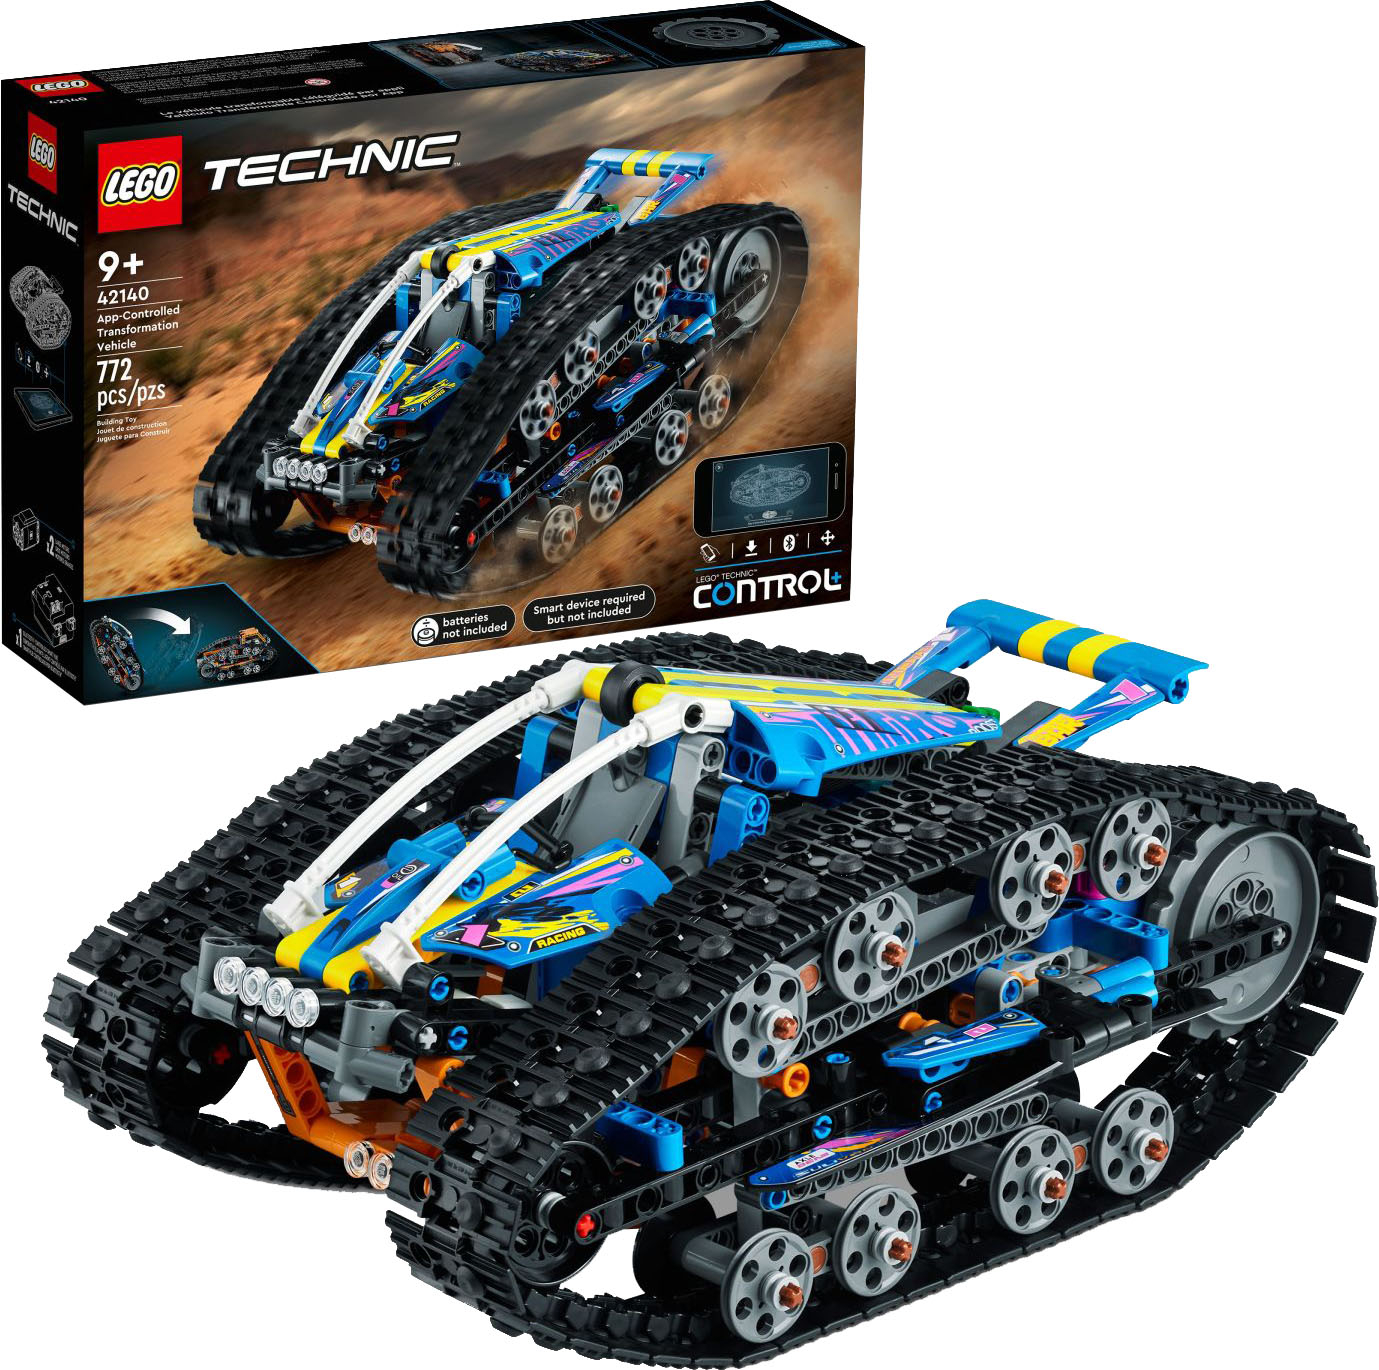 LEGO Technic Vehicle 42140 - Best Buy